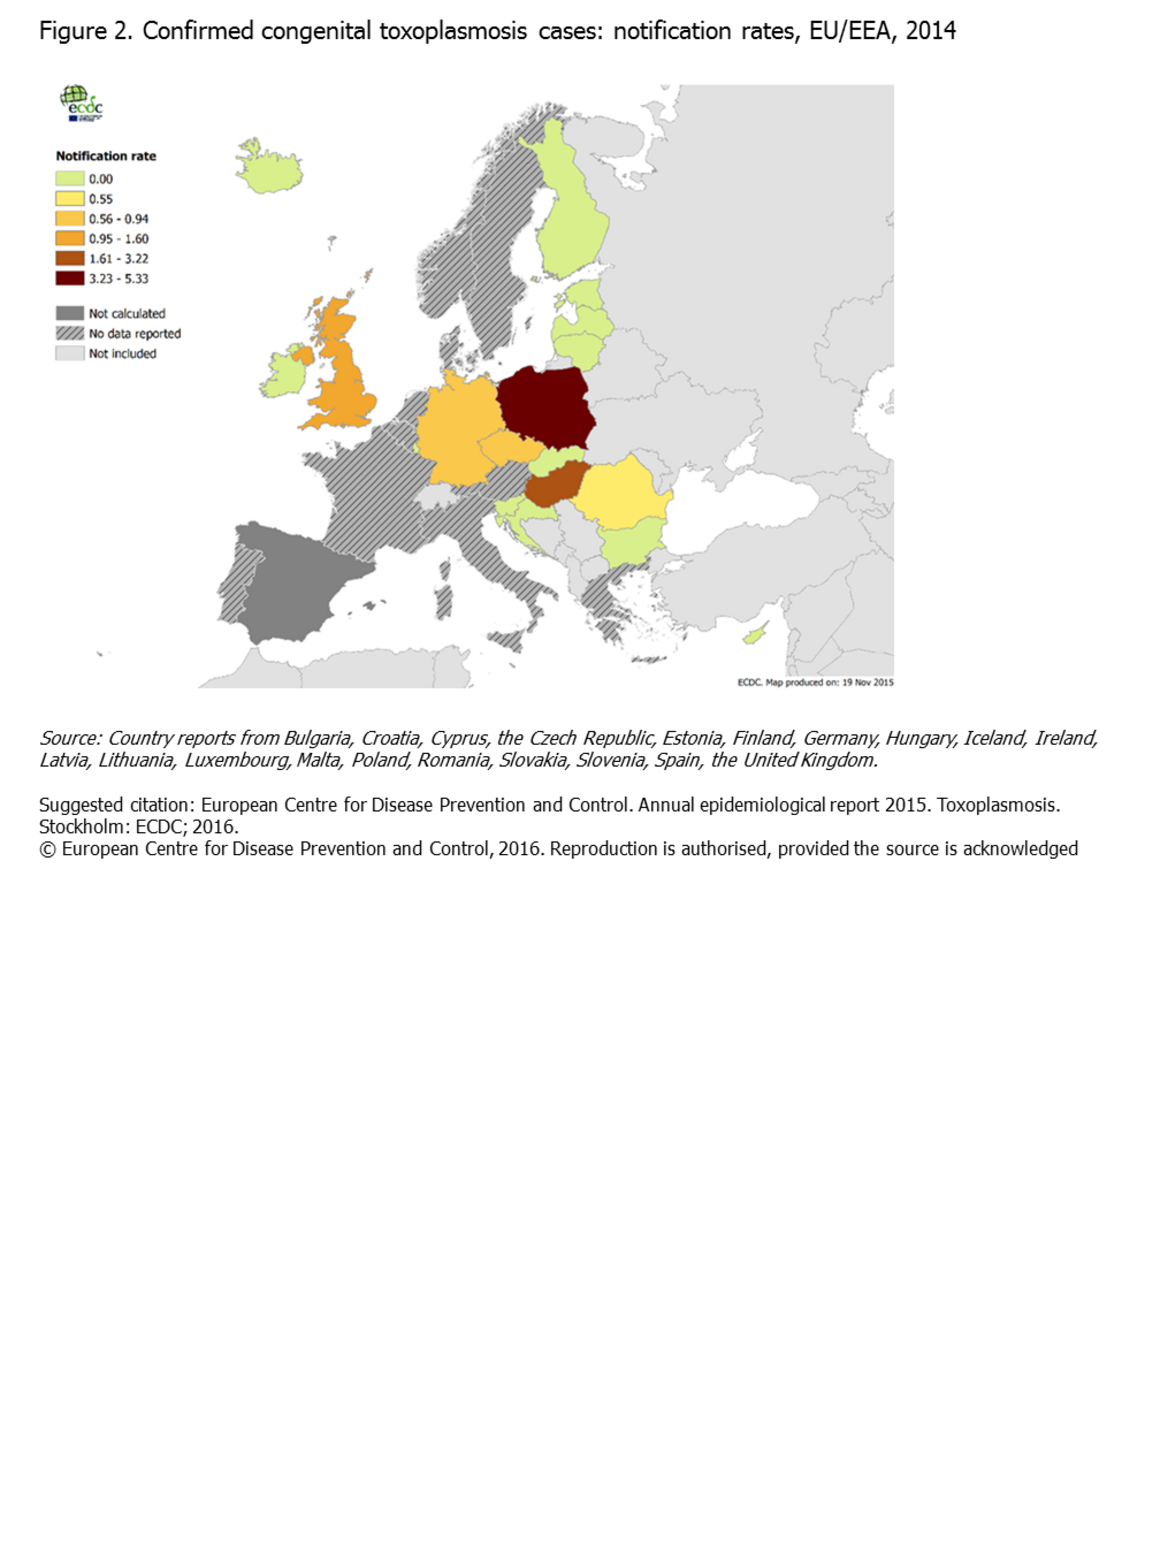 Reported confirmed congenital toxoplasmosis cases: rates per 100 000 live births, EU/EEA, 2014